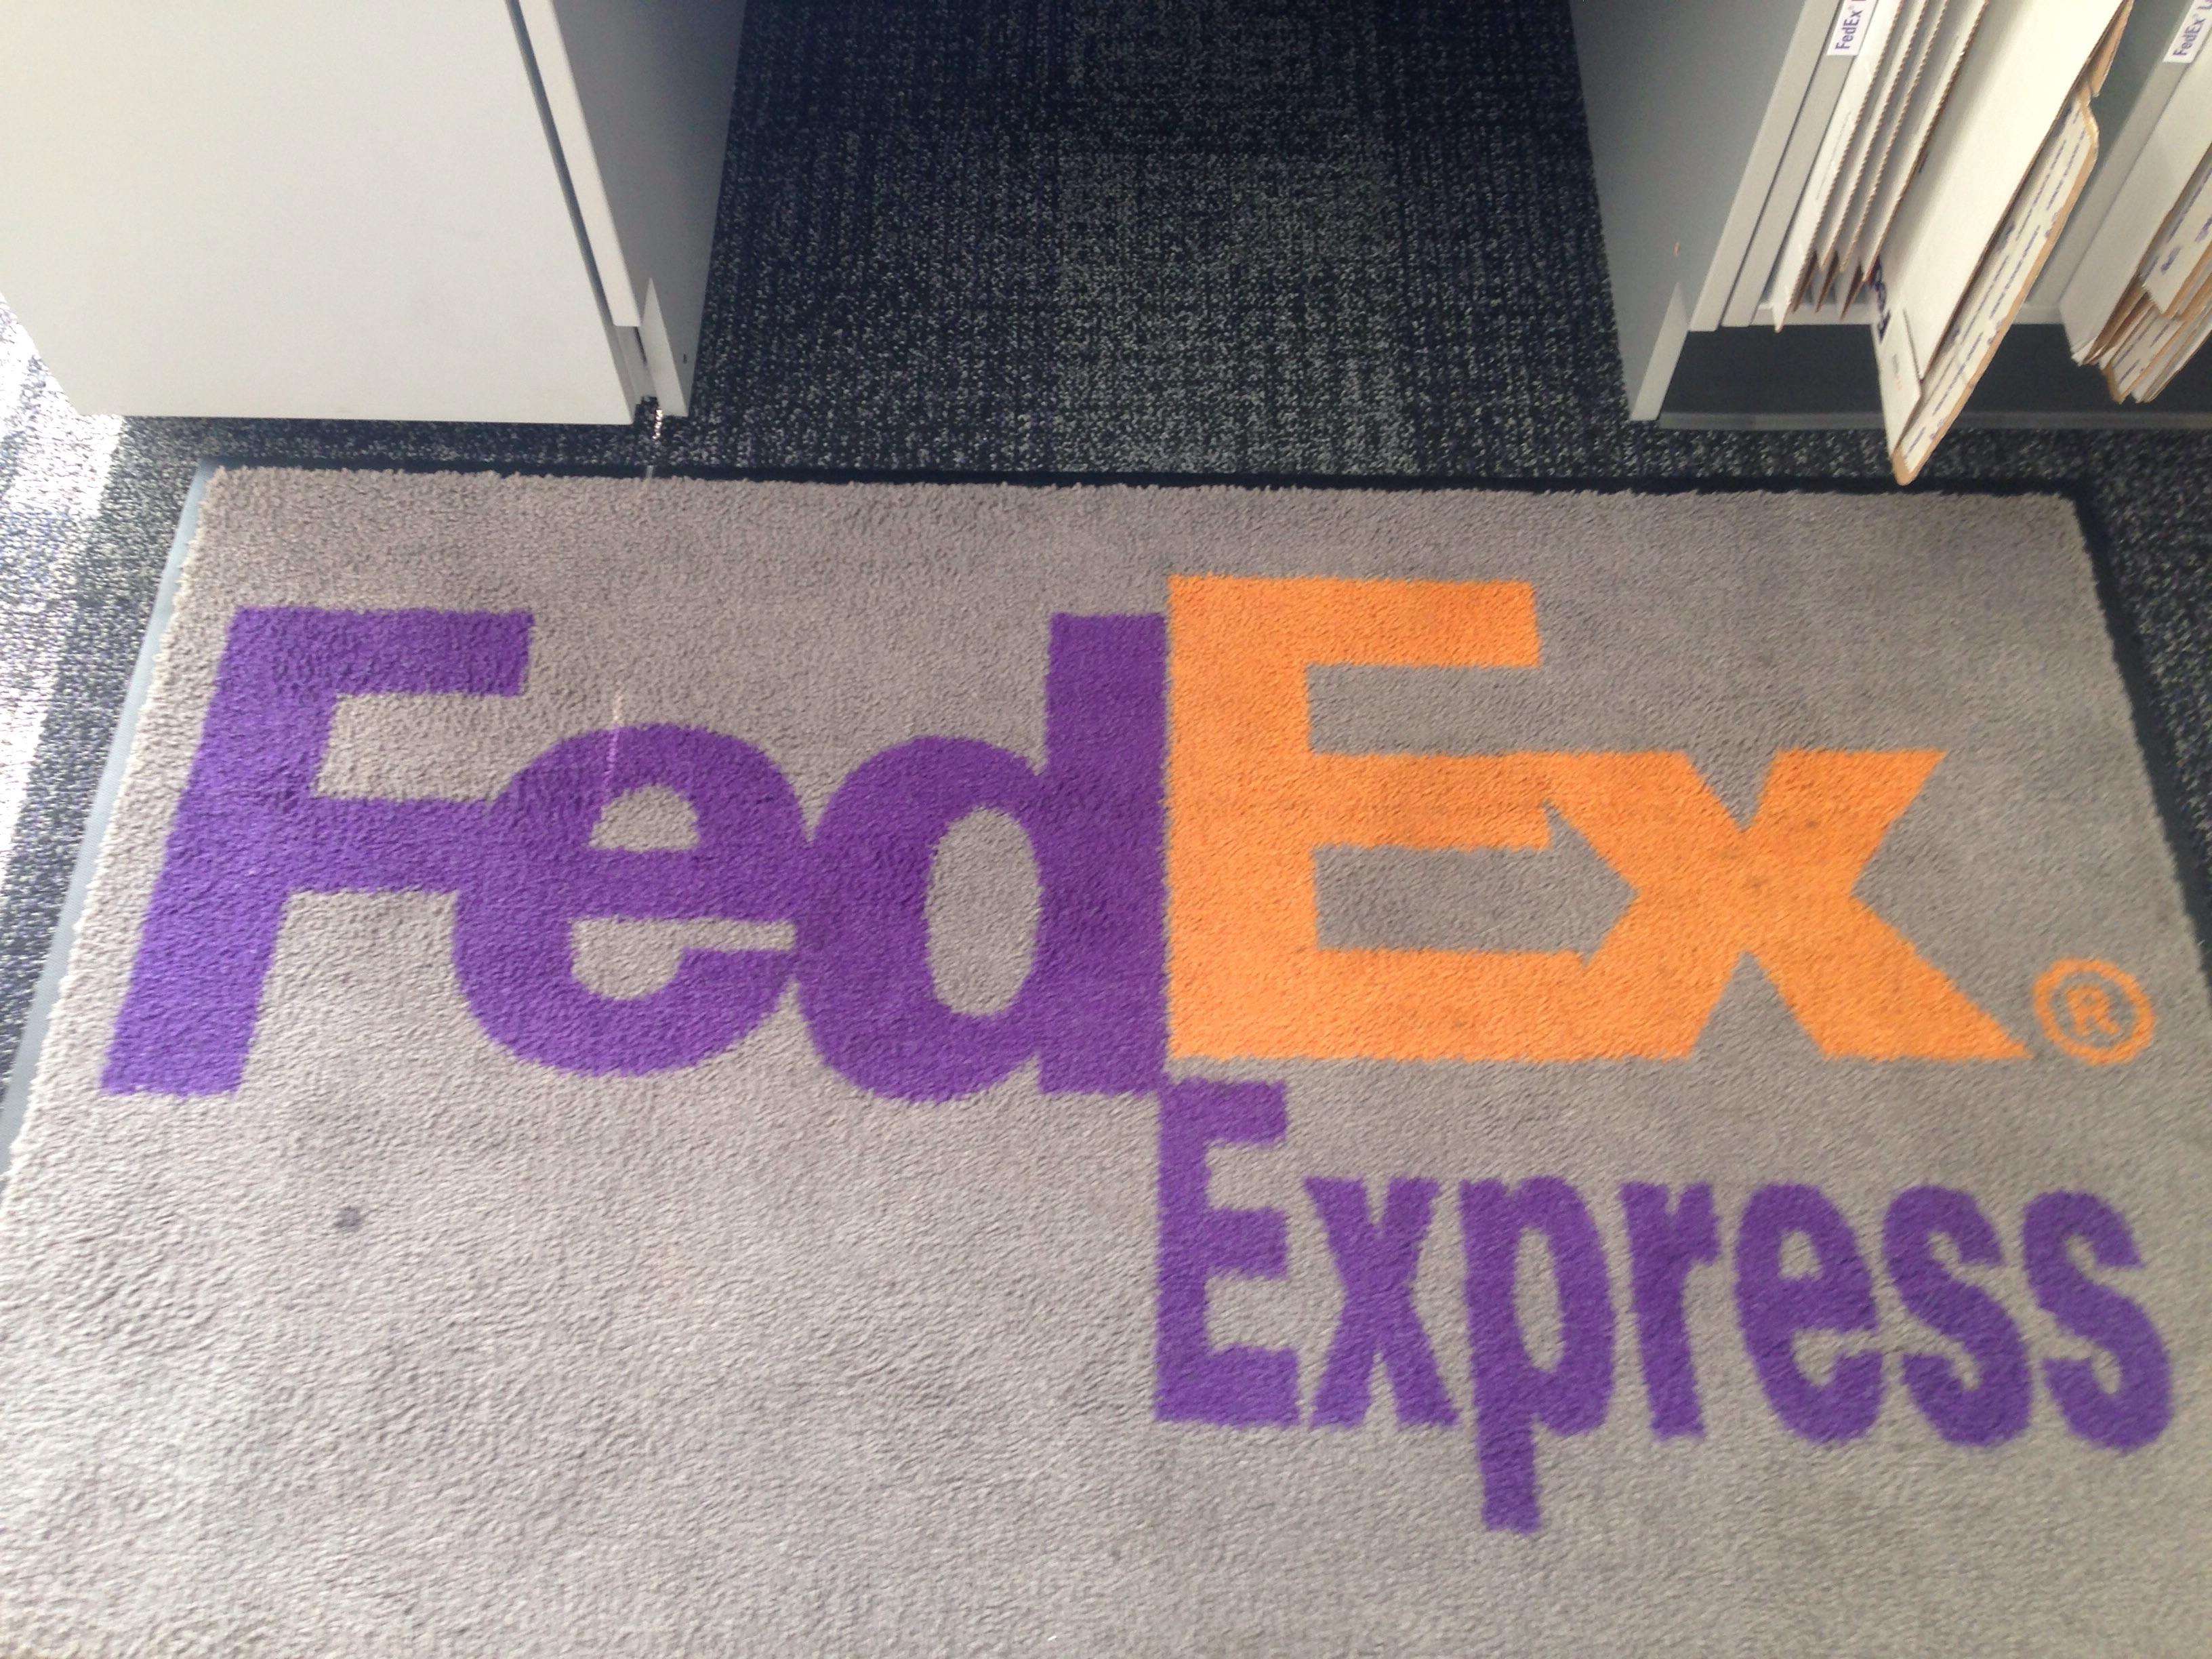 FedEx Official Logo - The 